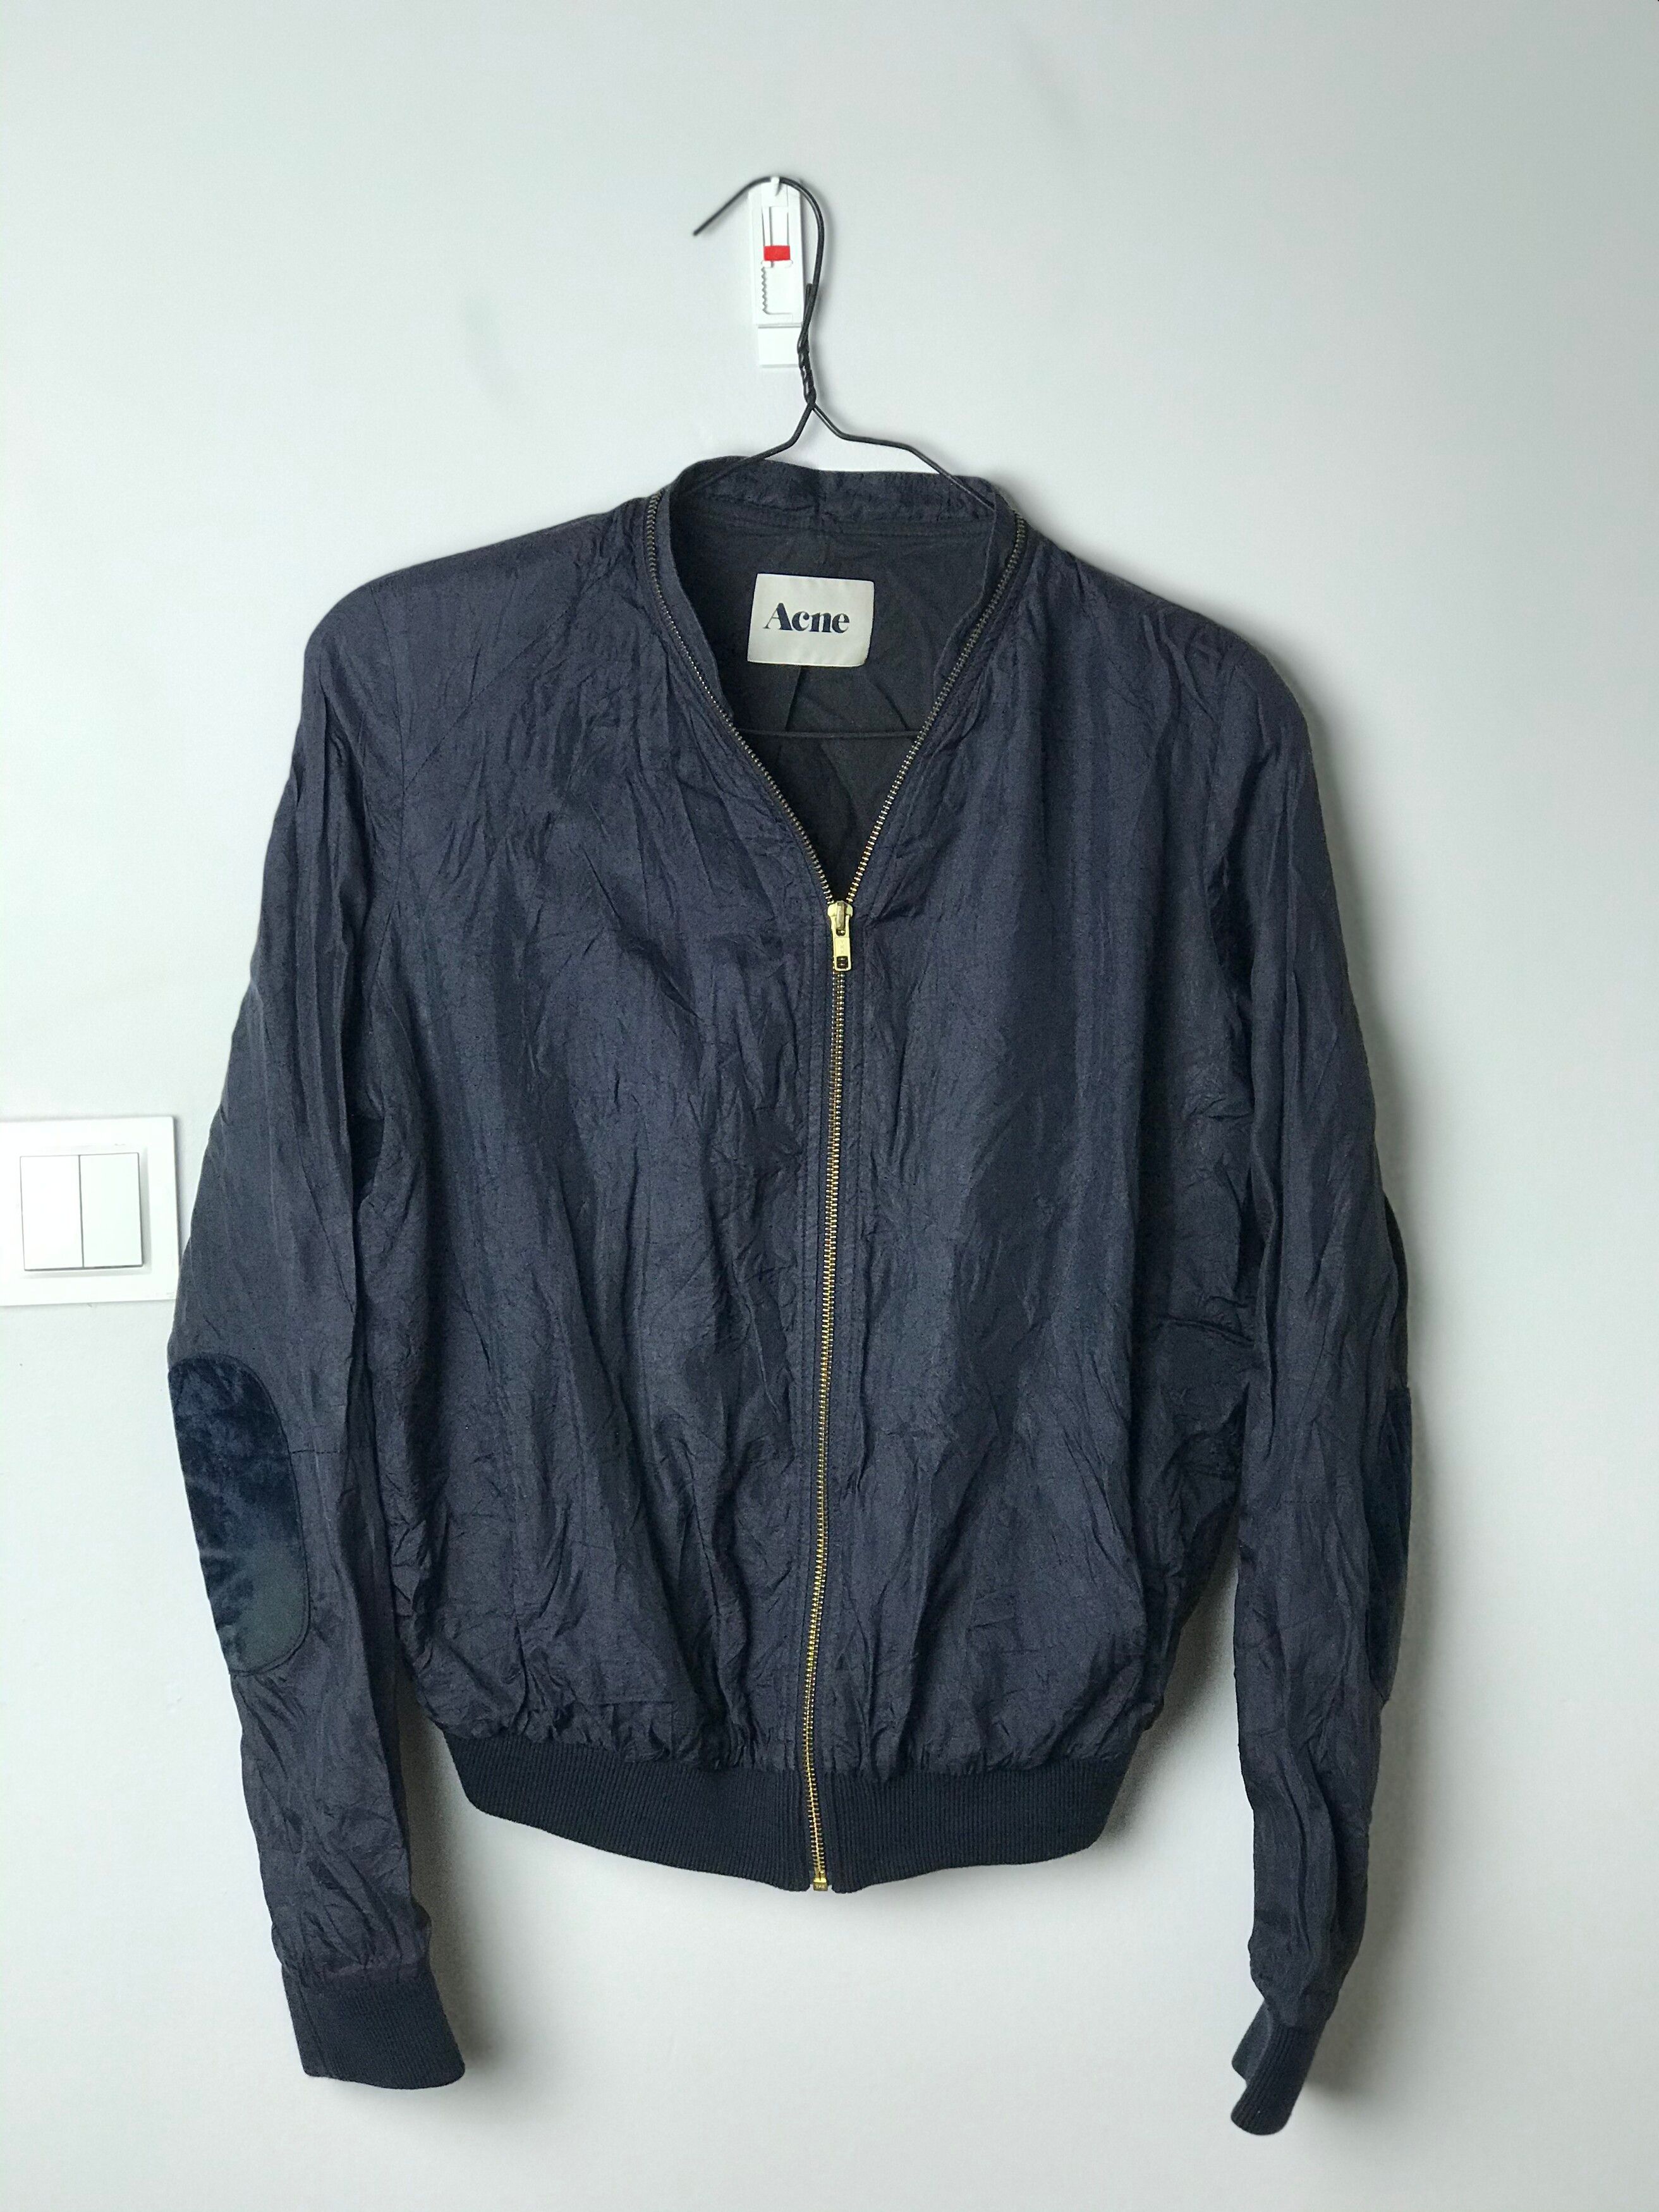 Acne Studios Acne Dark SS1 vintage light jacket full zip | Grailed